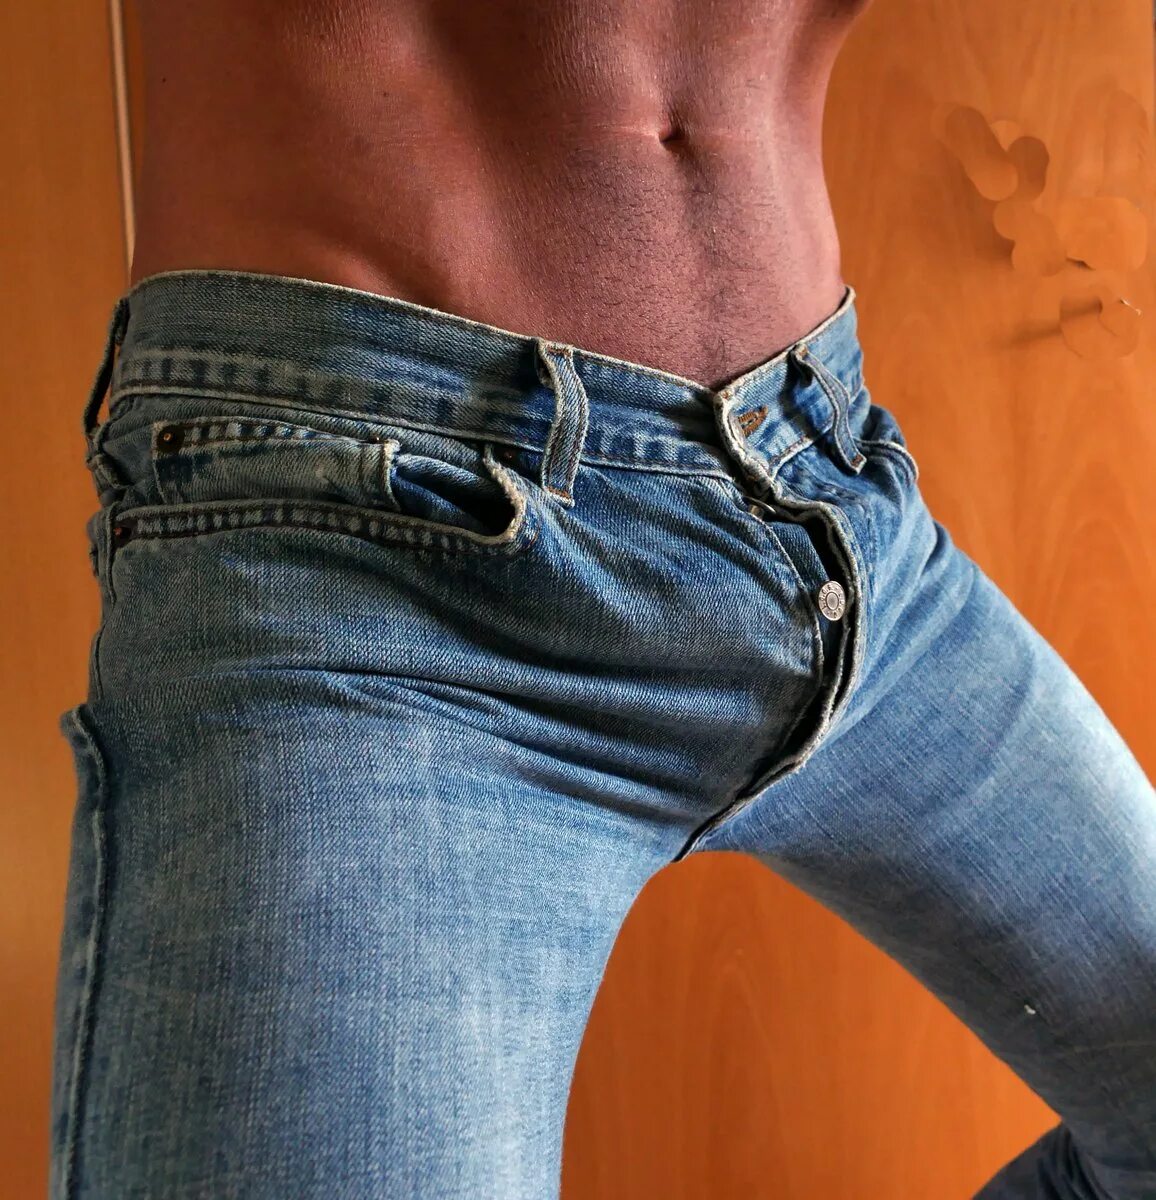 Cock jeans. Levis 501 bulge. Bulge джинсы. Men bulge джинсы. Denim bulges в джинсах.